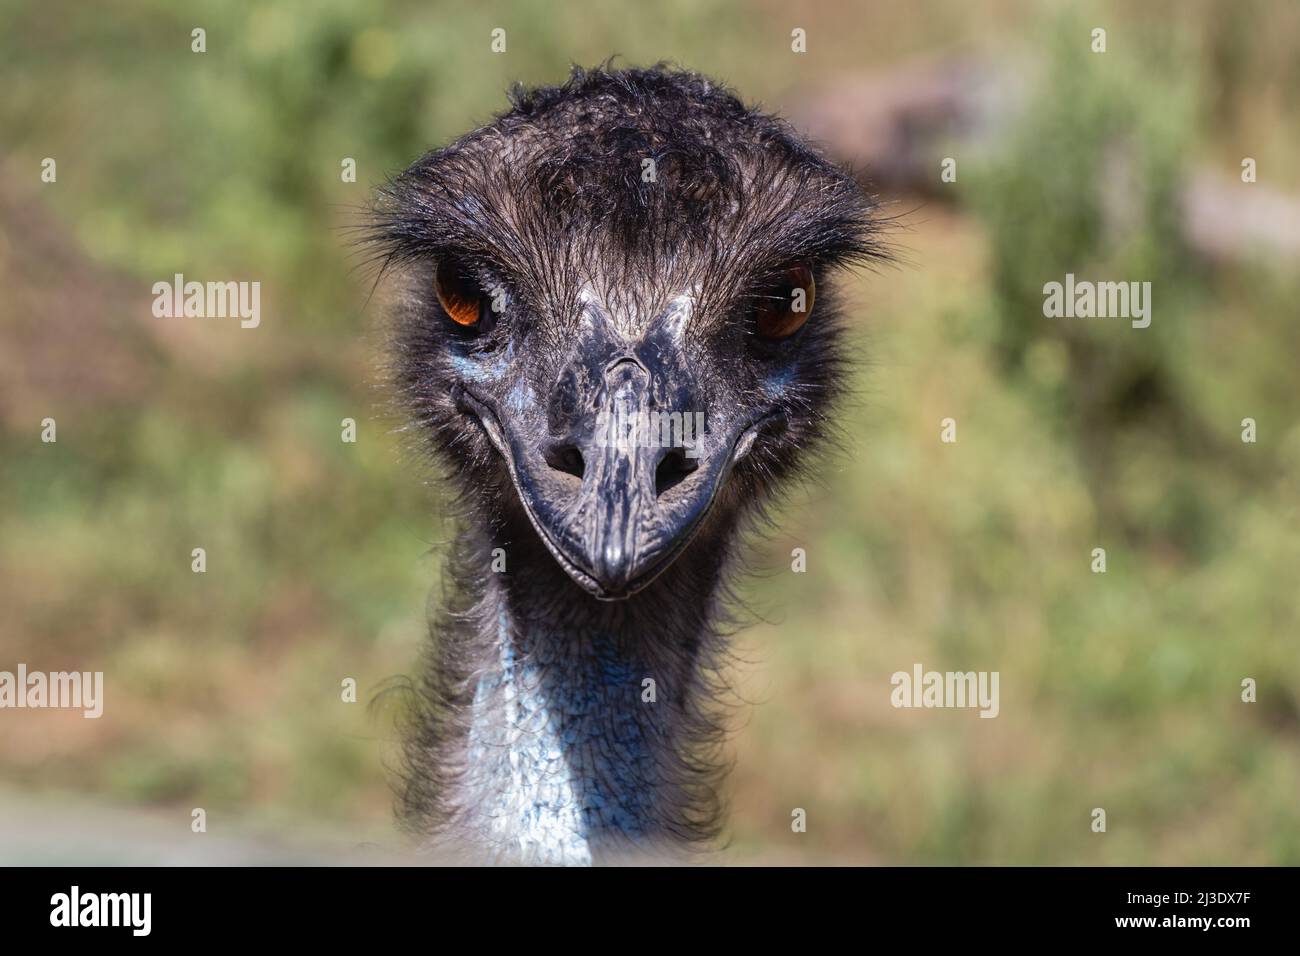 Emu bird front on portrait Stock Photo